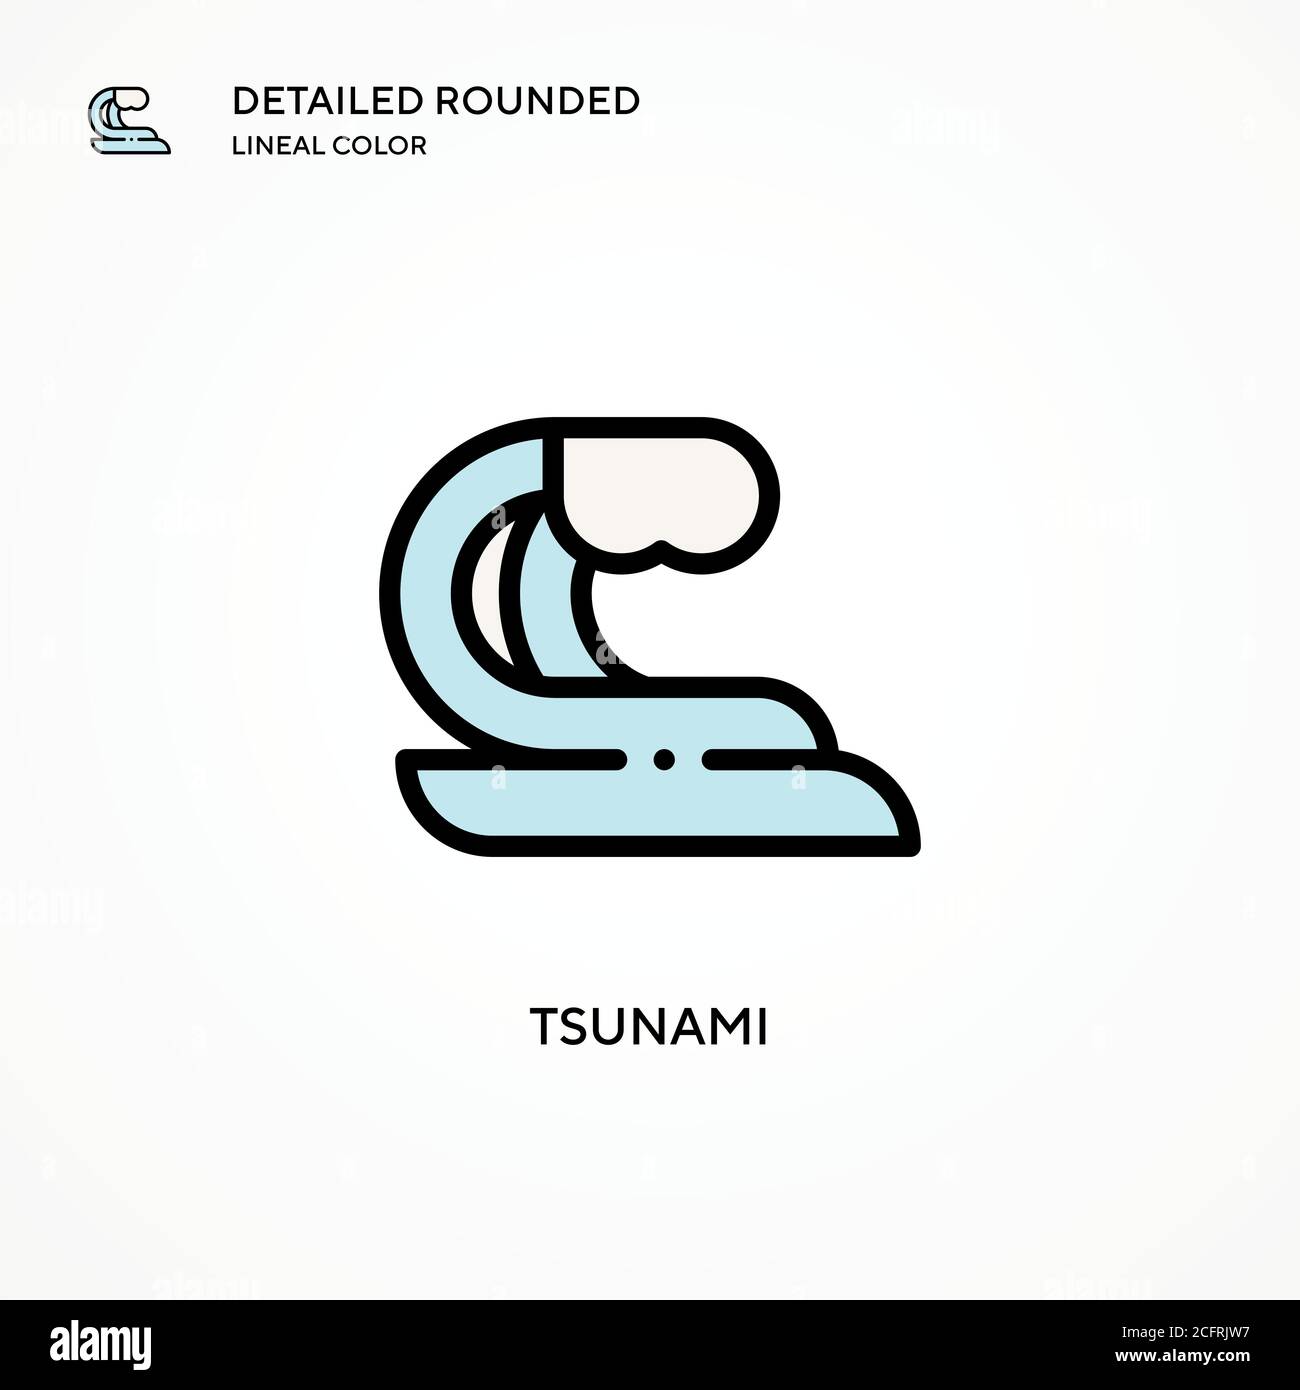 Tsunami vector icon. Modern vector illustration concepts. Easy to edit and customize. Stock Vector